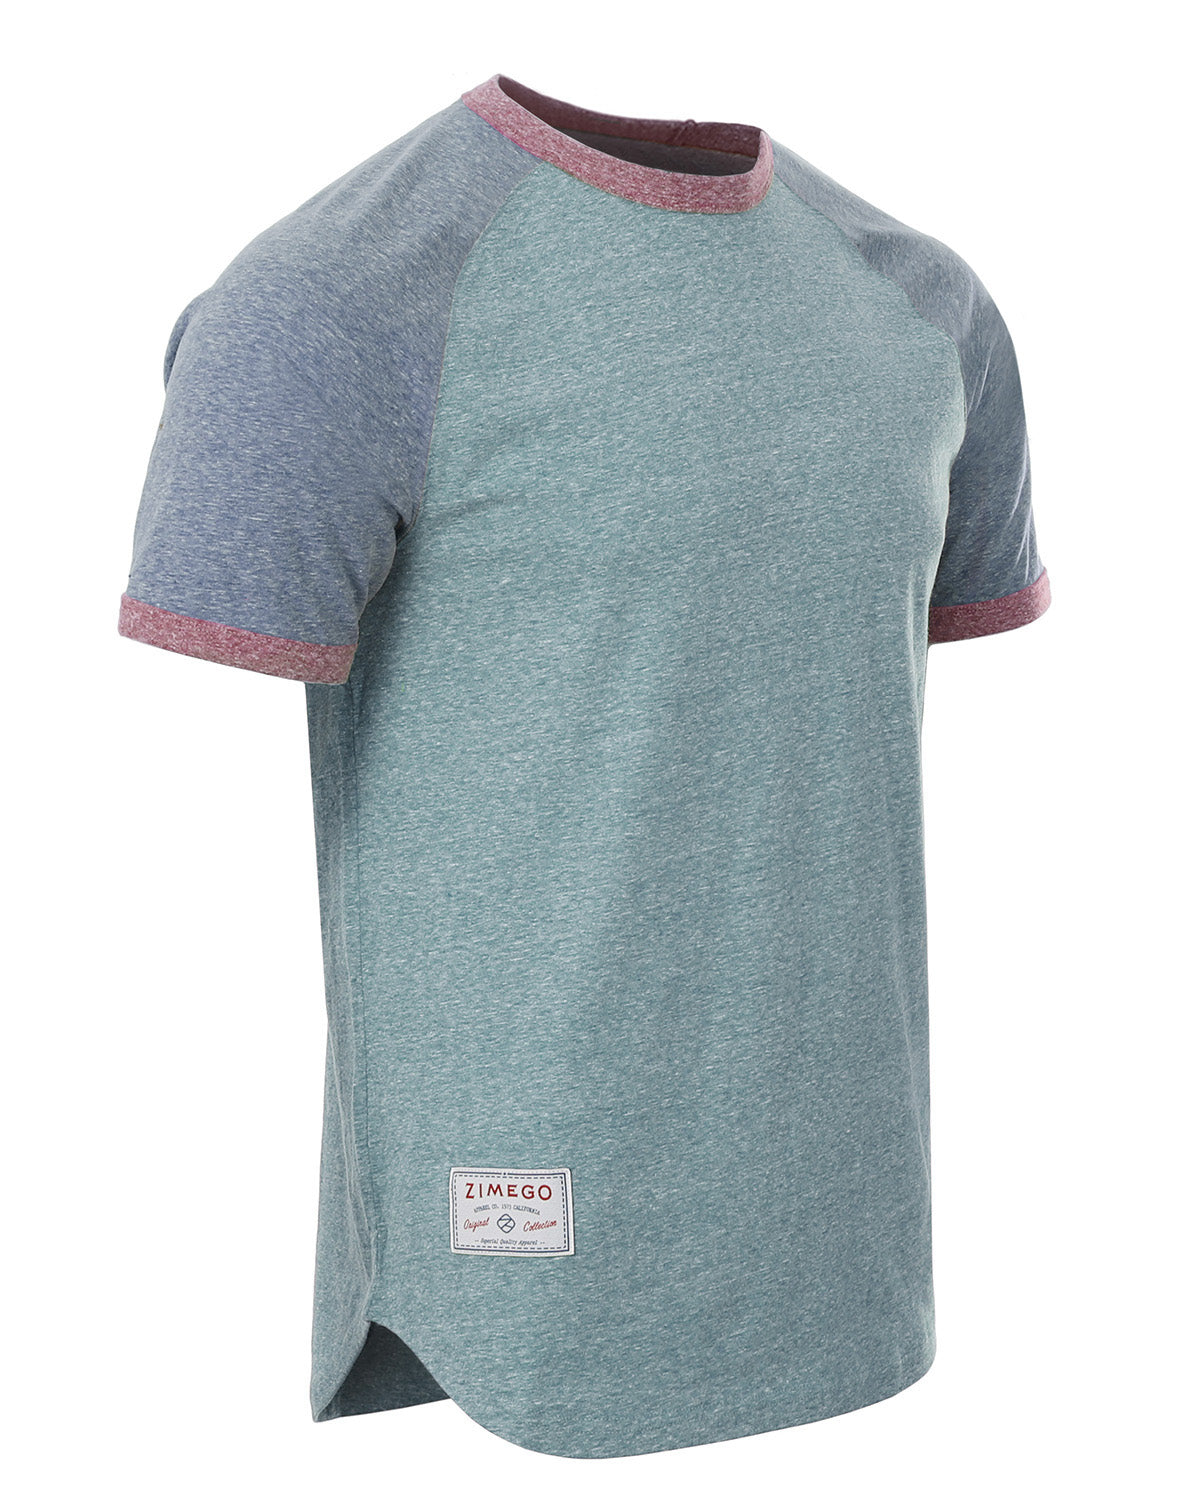 TEEK - Mens Short Sleeve Classic Retro Contrast Ringer T-Shirt TOPS theteekdotcom   